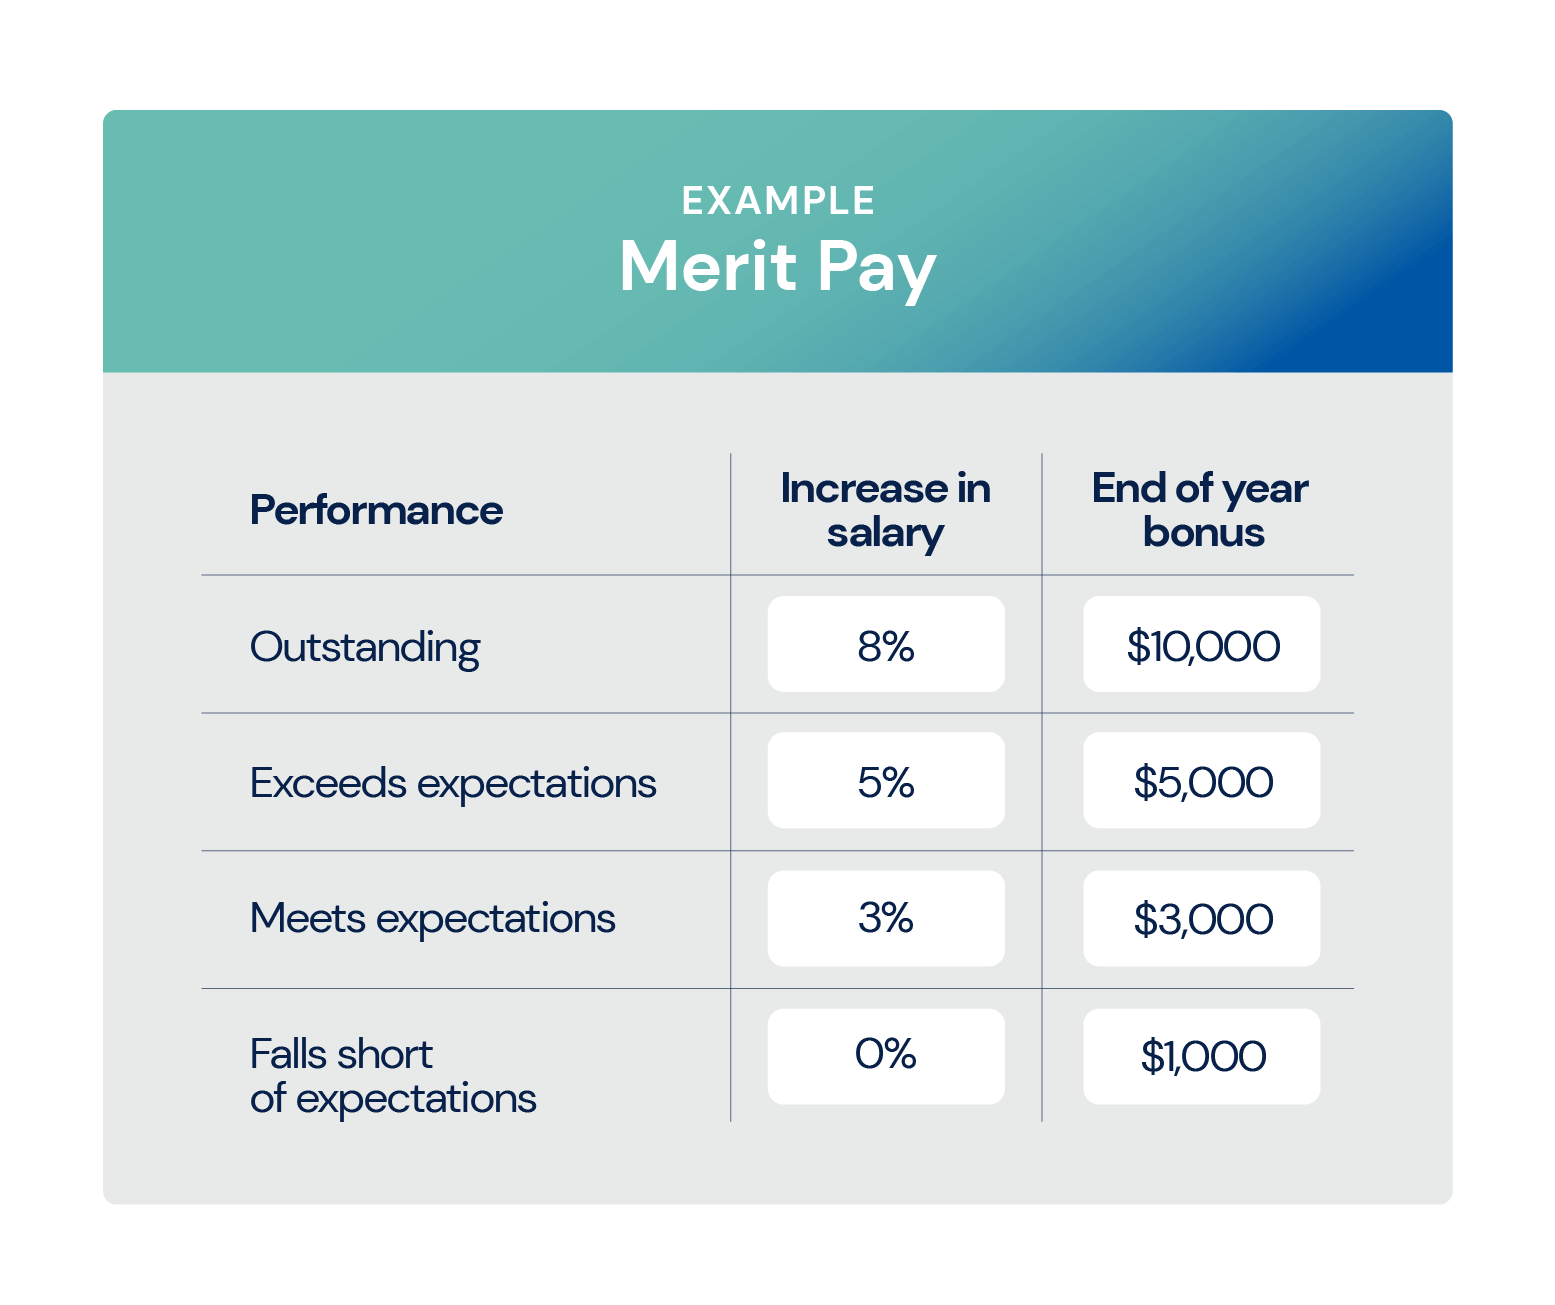 Merit Pay